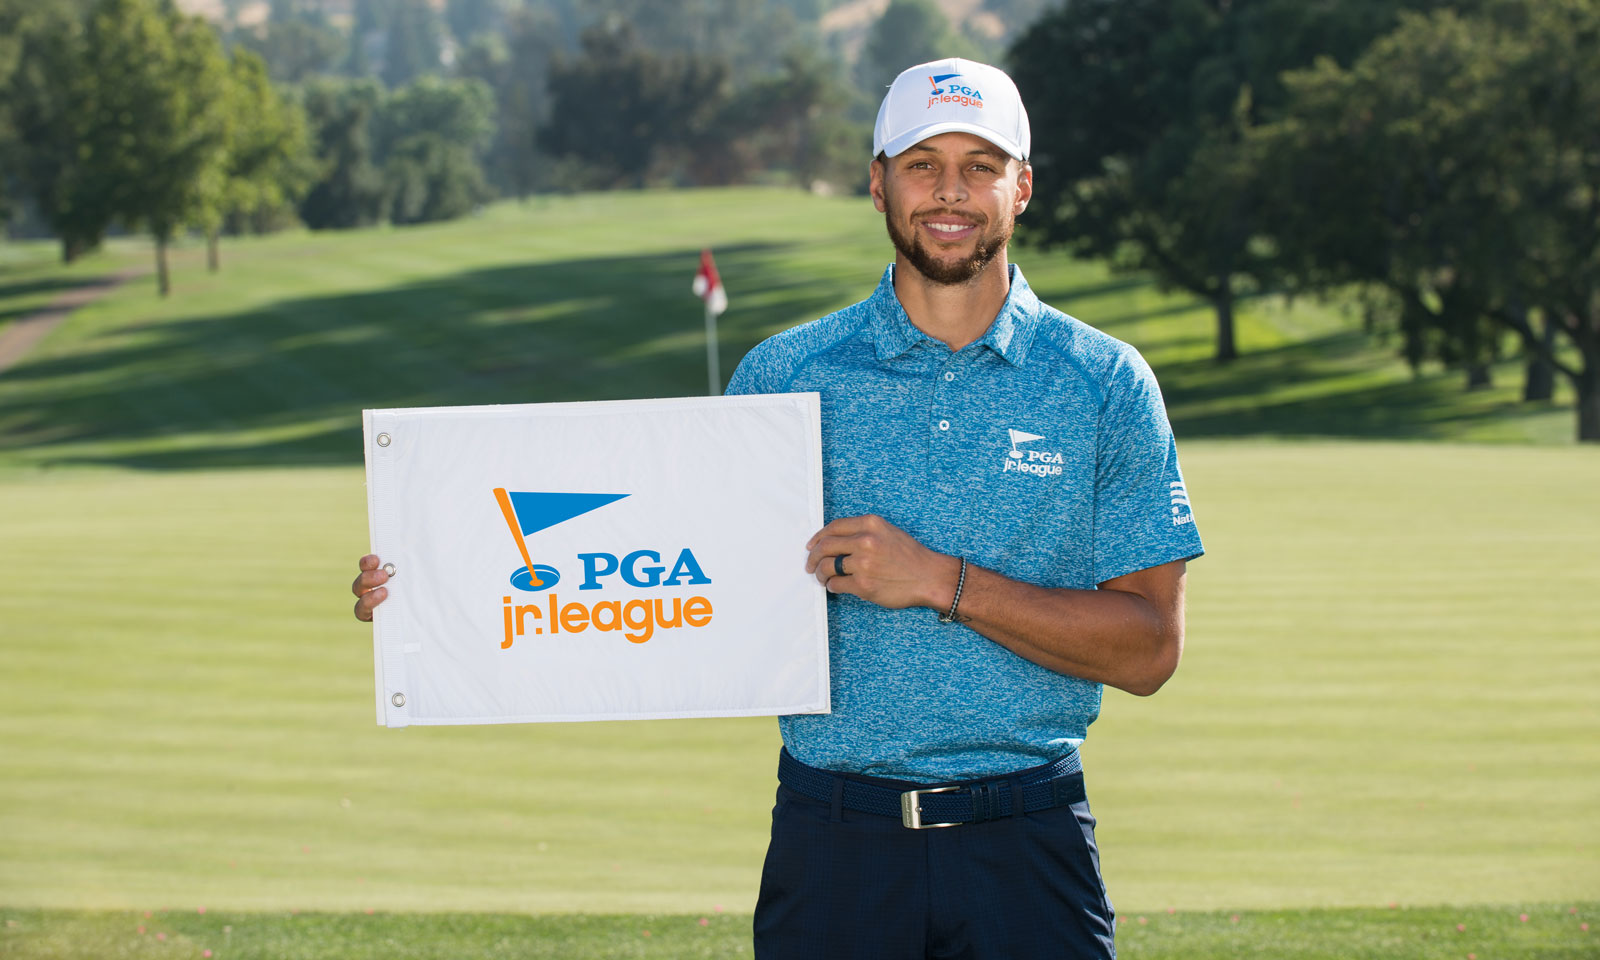 PGA-Jr.-League-Welcomes-All-Star-Curry-as-Golf-Ambassador